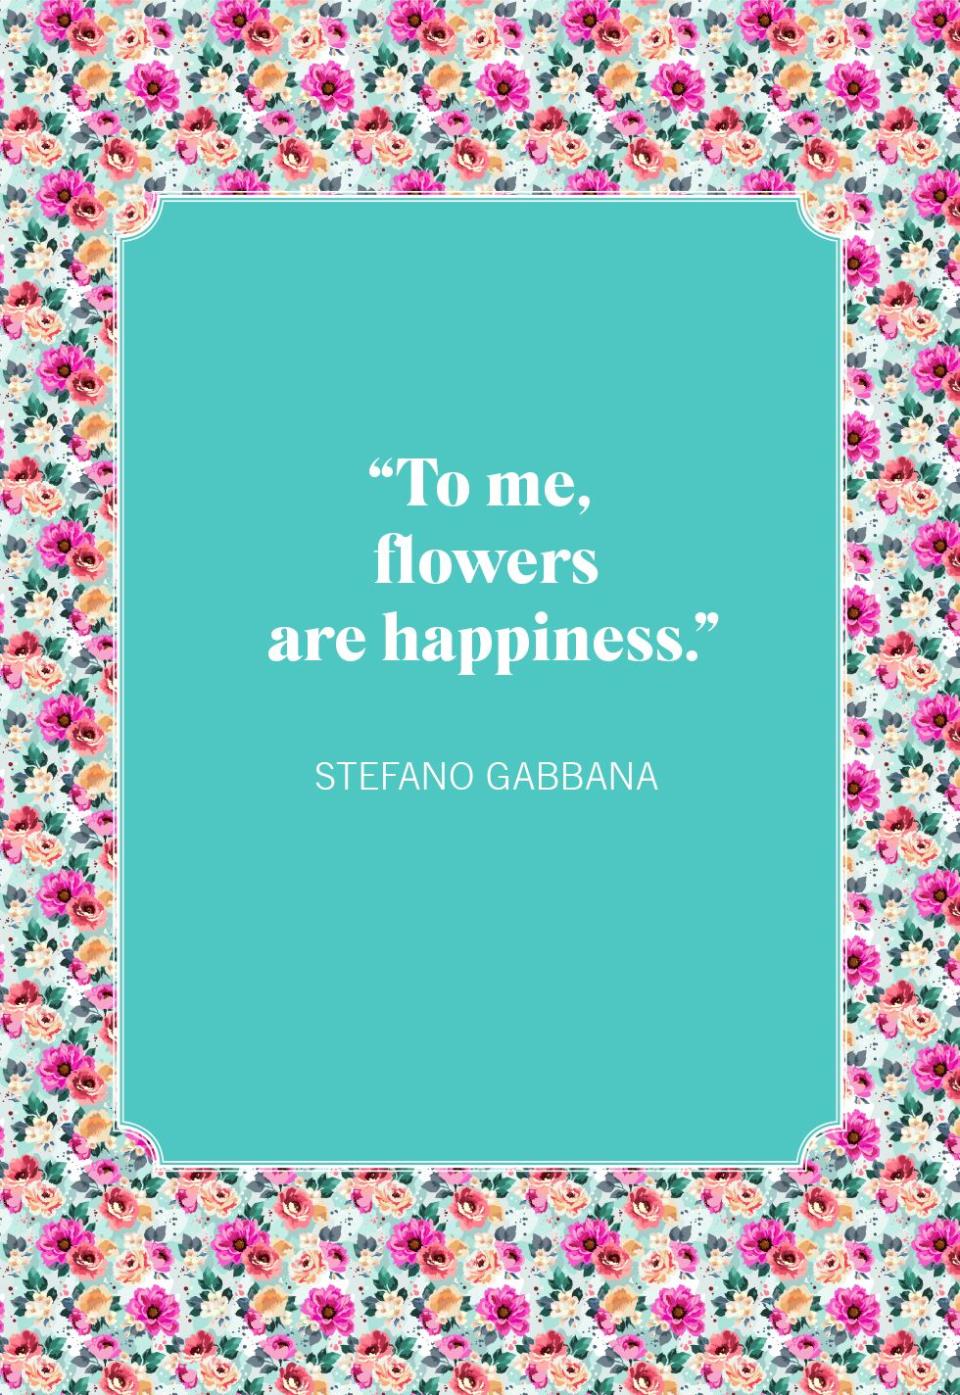 stefano gabbana flower quotes